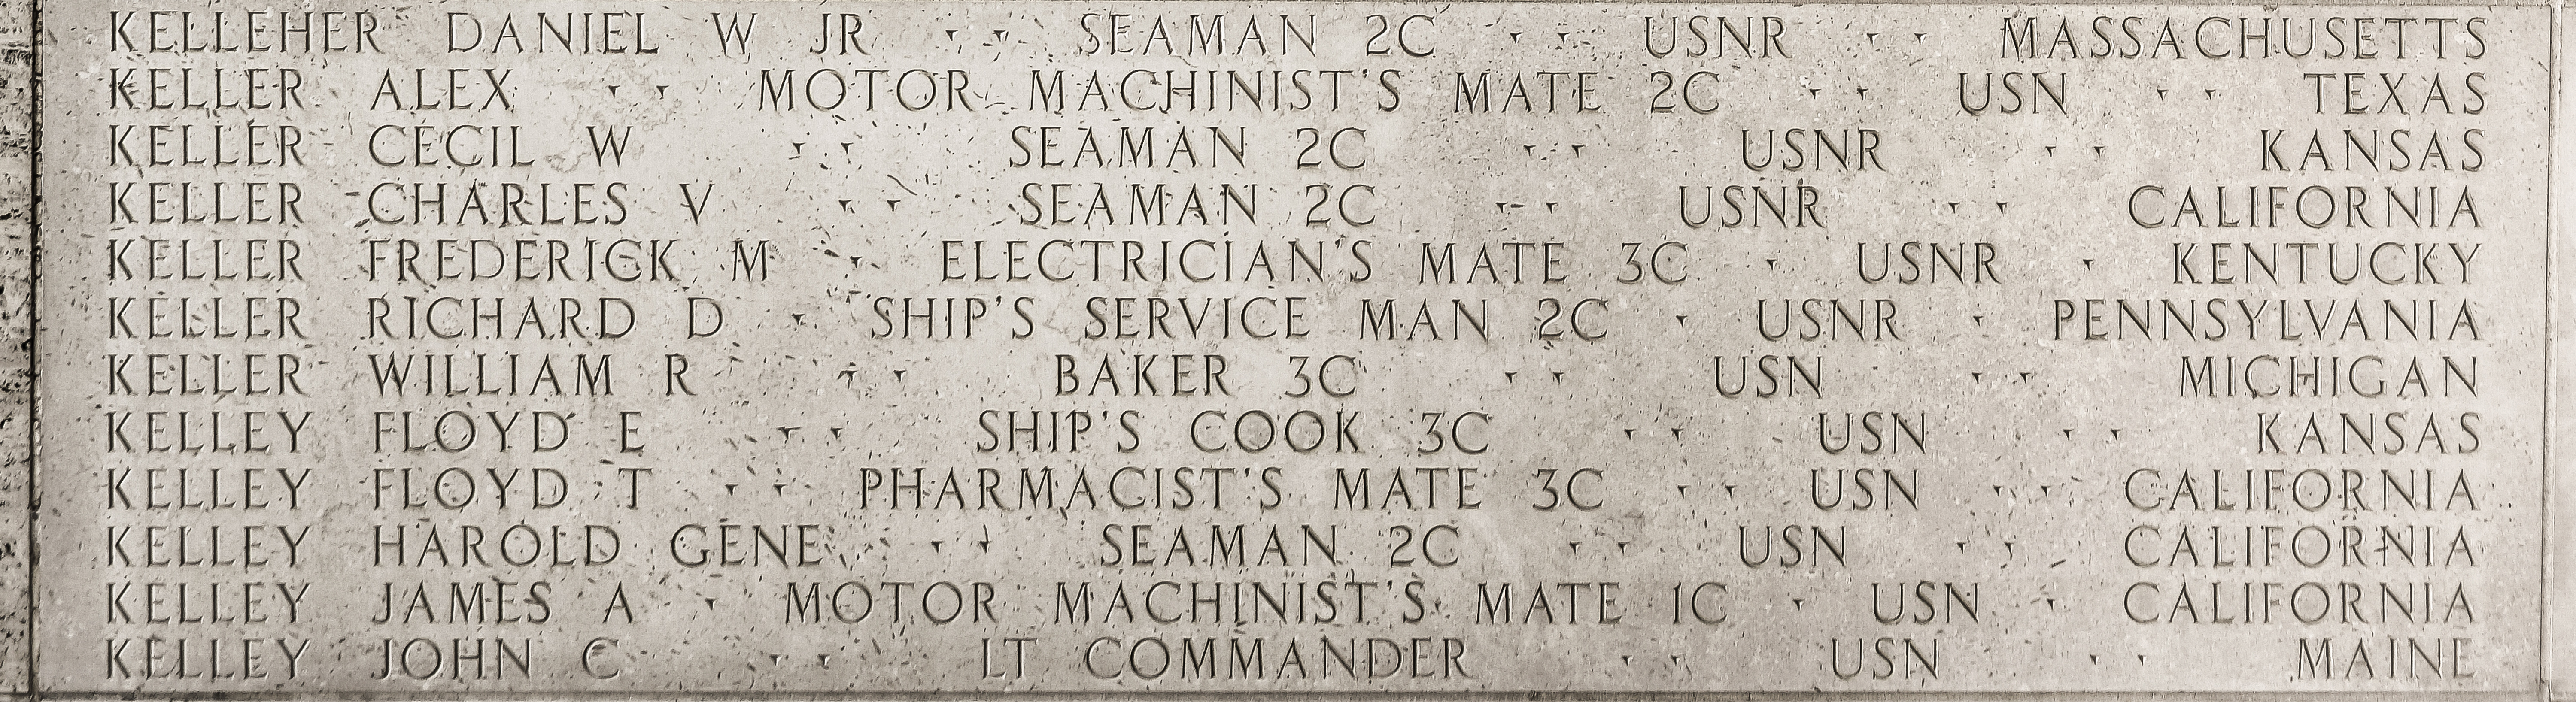 Cecil W. Keller, Seaman Second Class